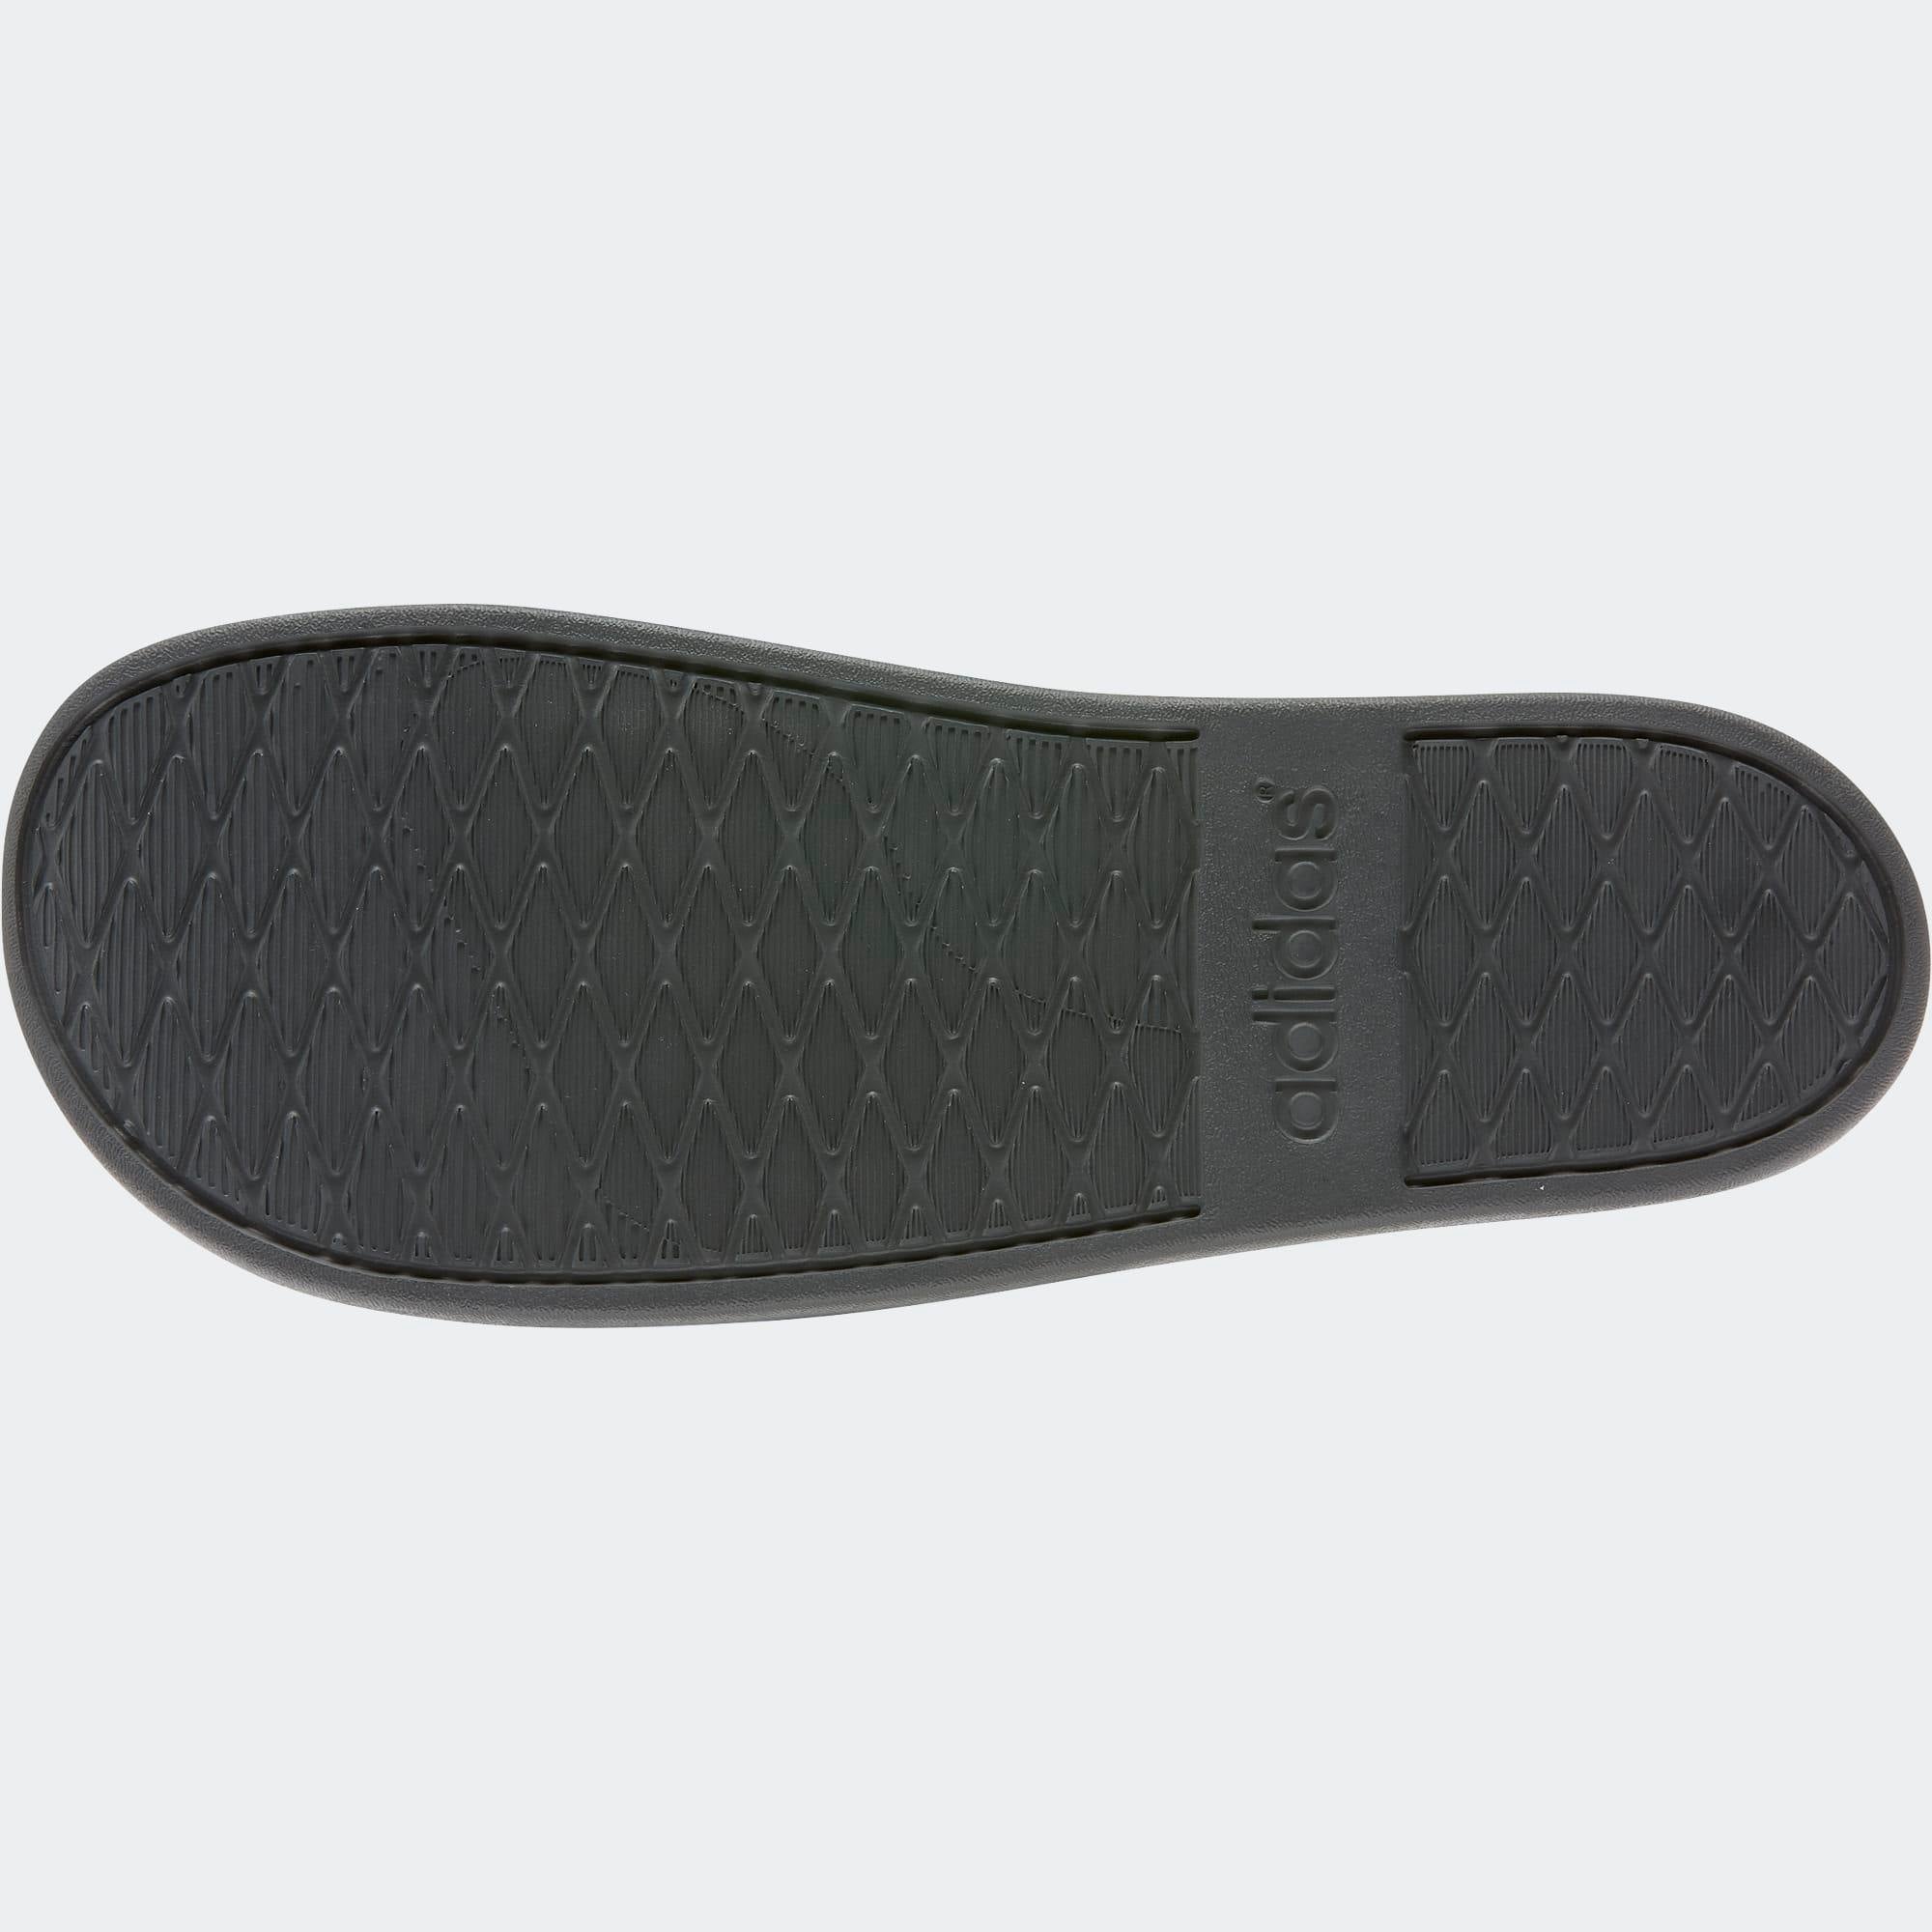 A-Z56 (Adilette comfort ad black/ftwht/gresix) 22092815 - Otahuhu Shoes